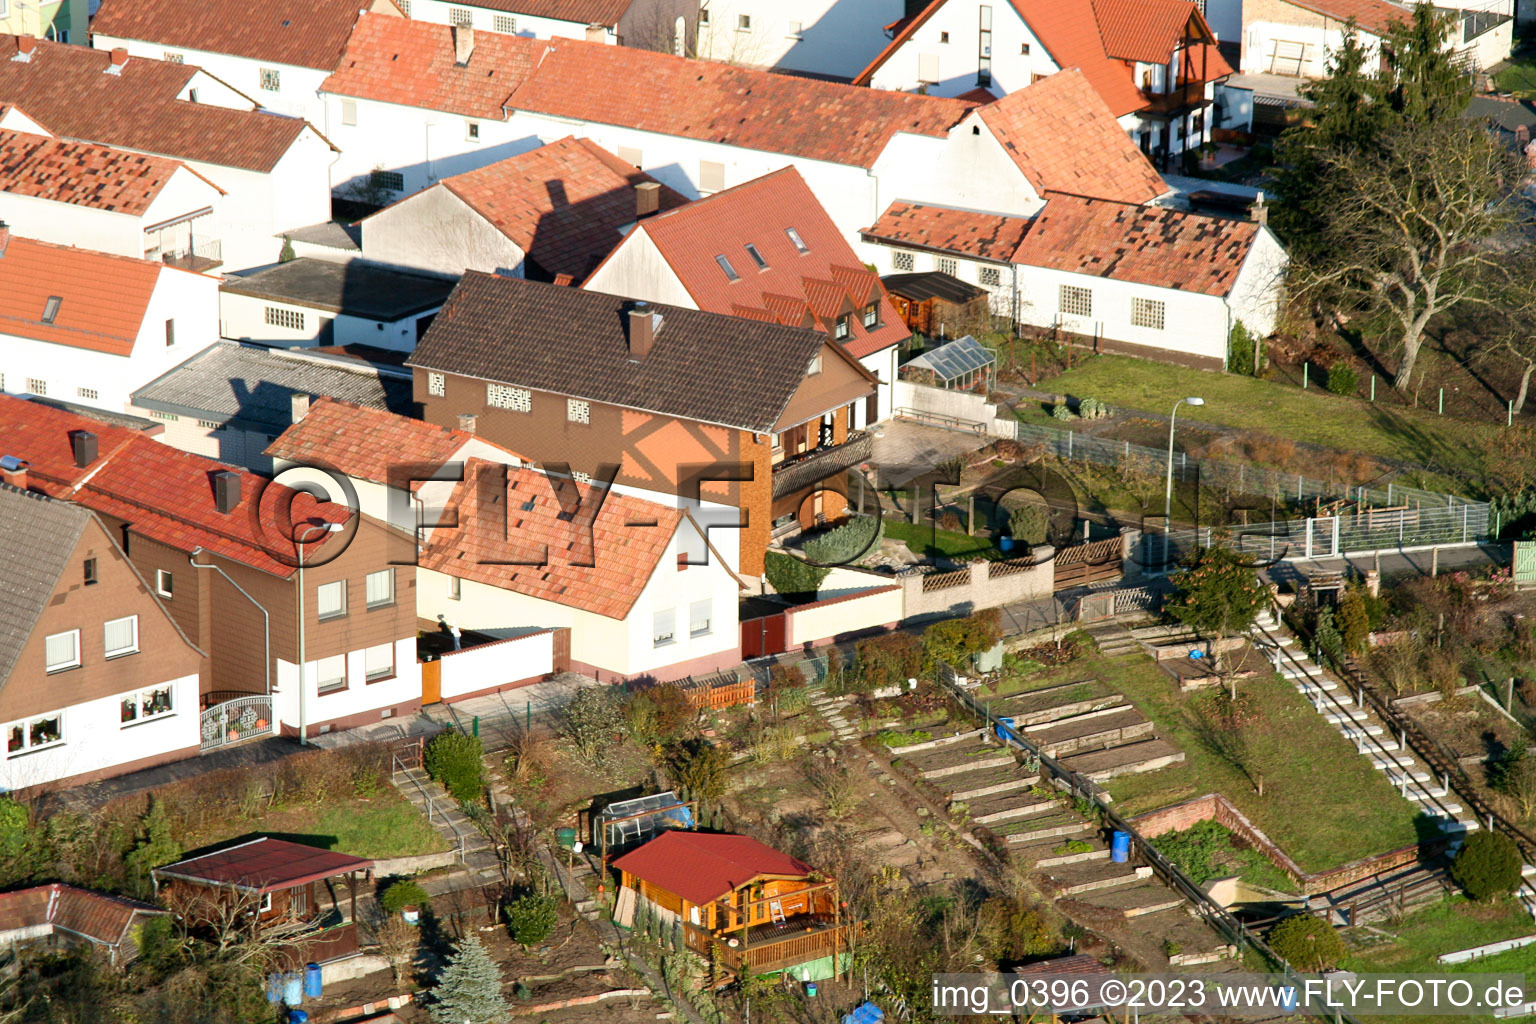 Bird's eye view of Bahnhofstr in Jockgrim in the state Rhineland-Palatinate, Germany